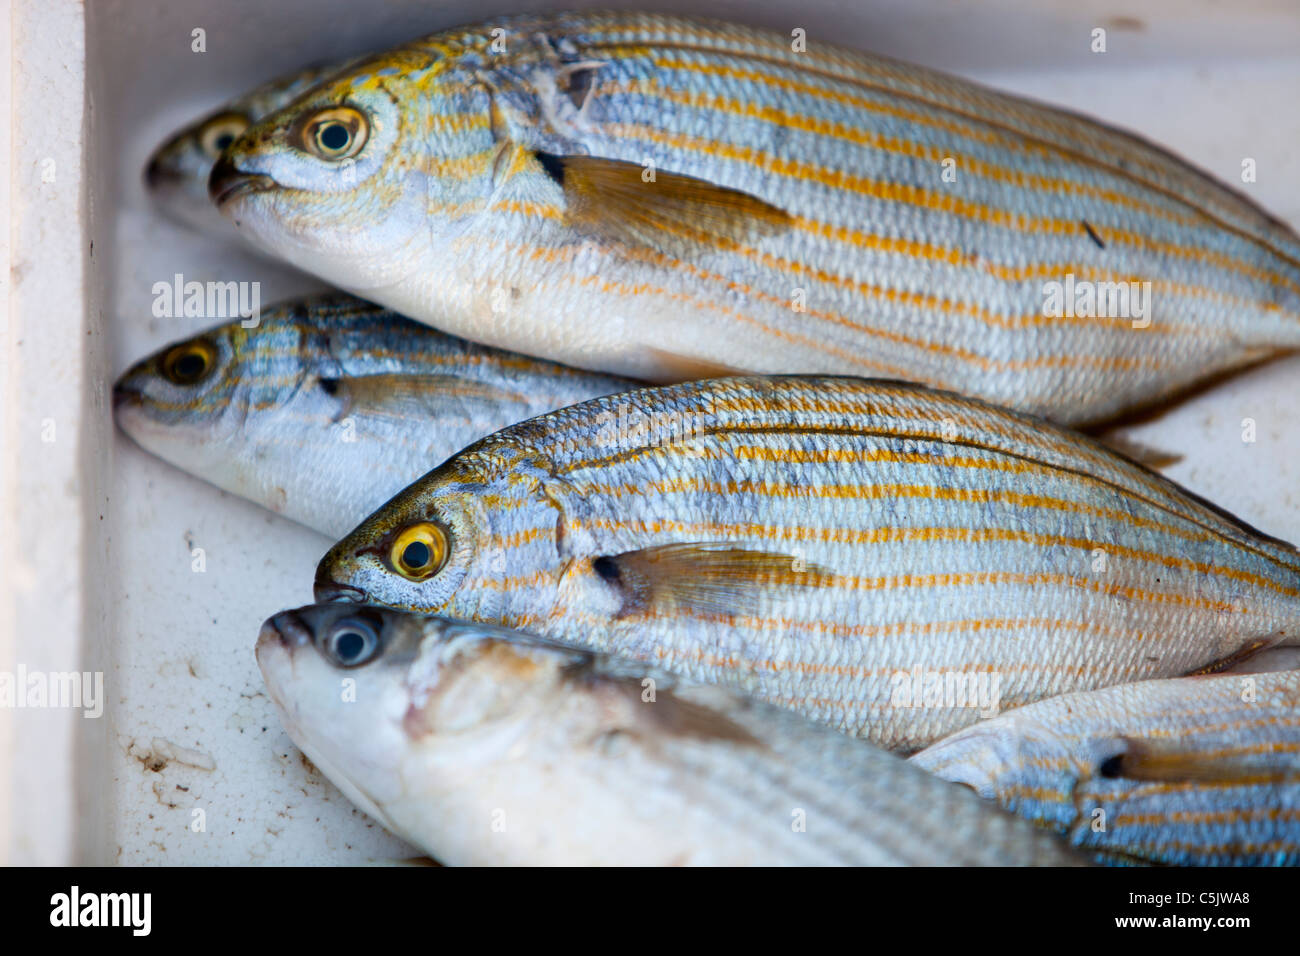 Mediteranean fish caught off Lesbos, Greece. Stock Photo